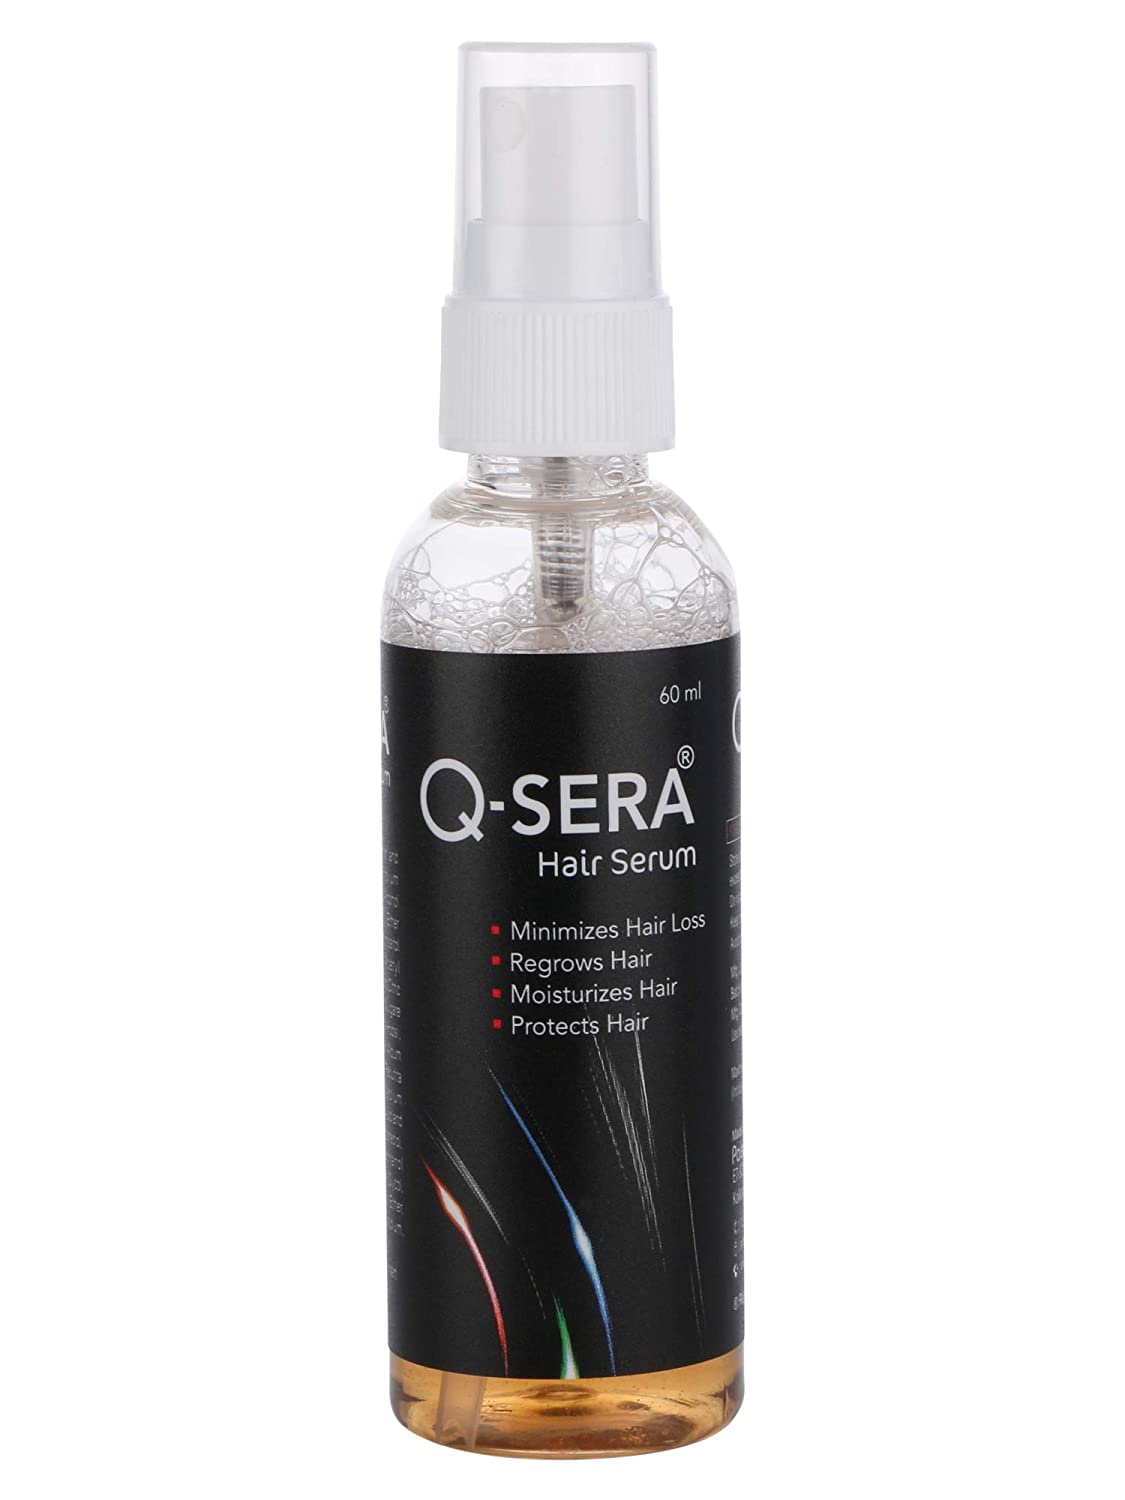 Q-Sera Hair Serum, 60 ml Price, Uses, Side Effects, Composition - Apollo  Pharmacy